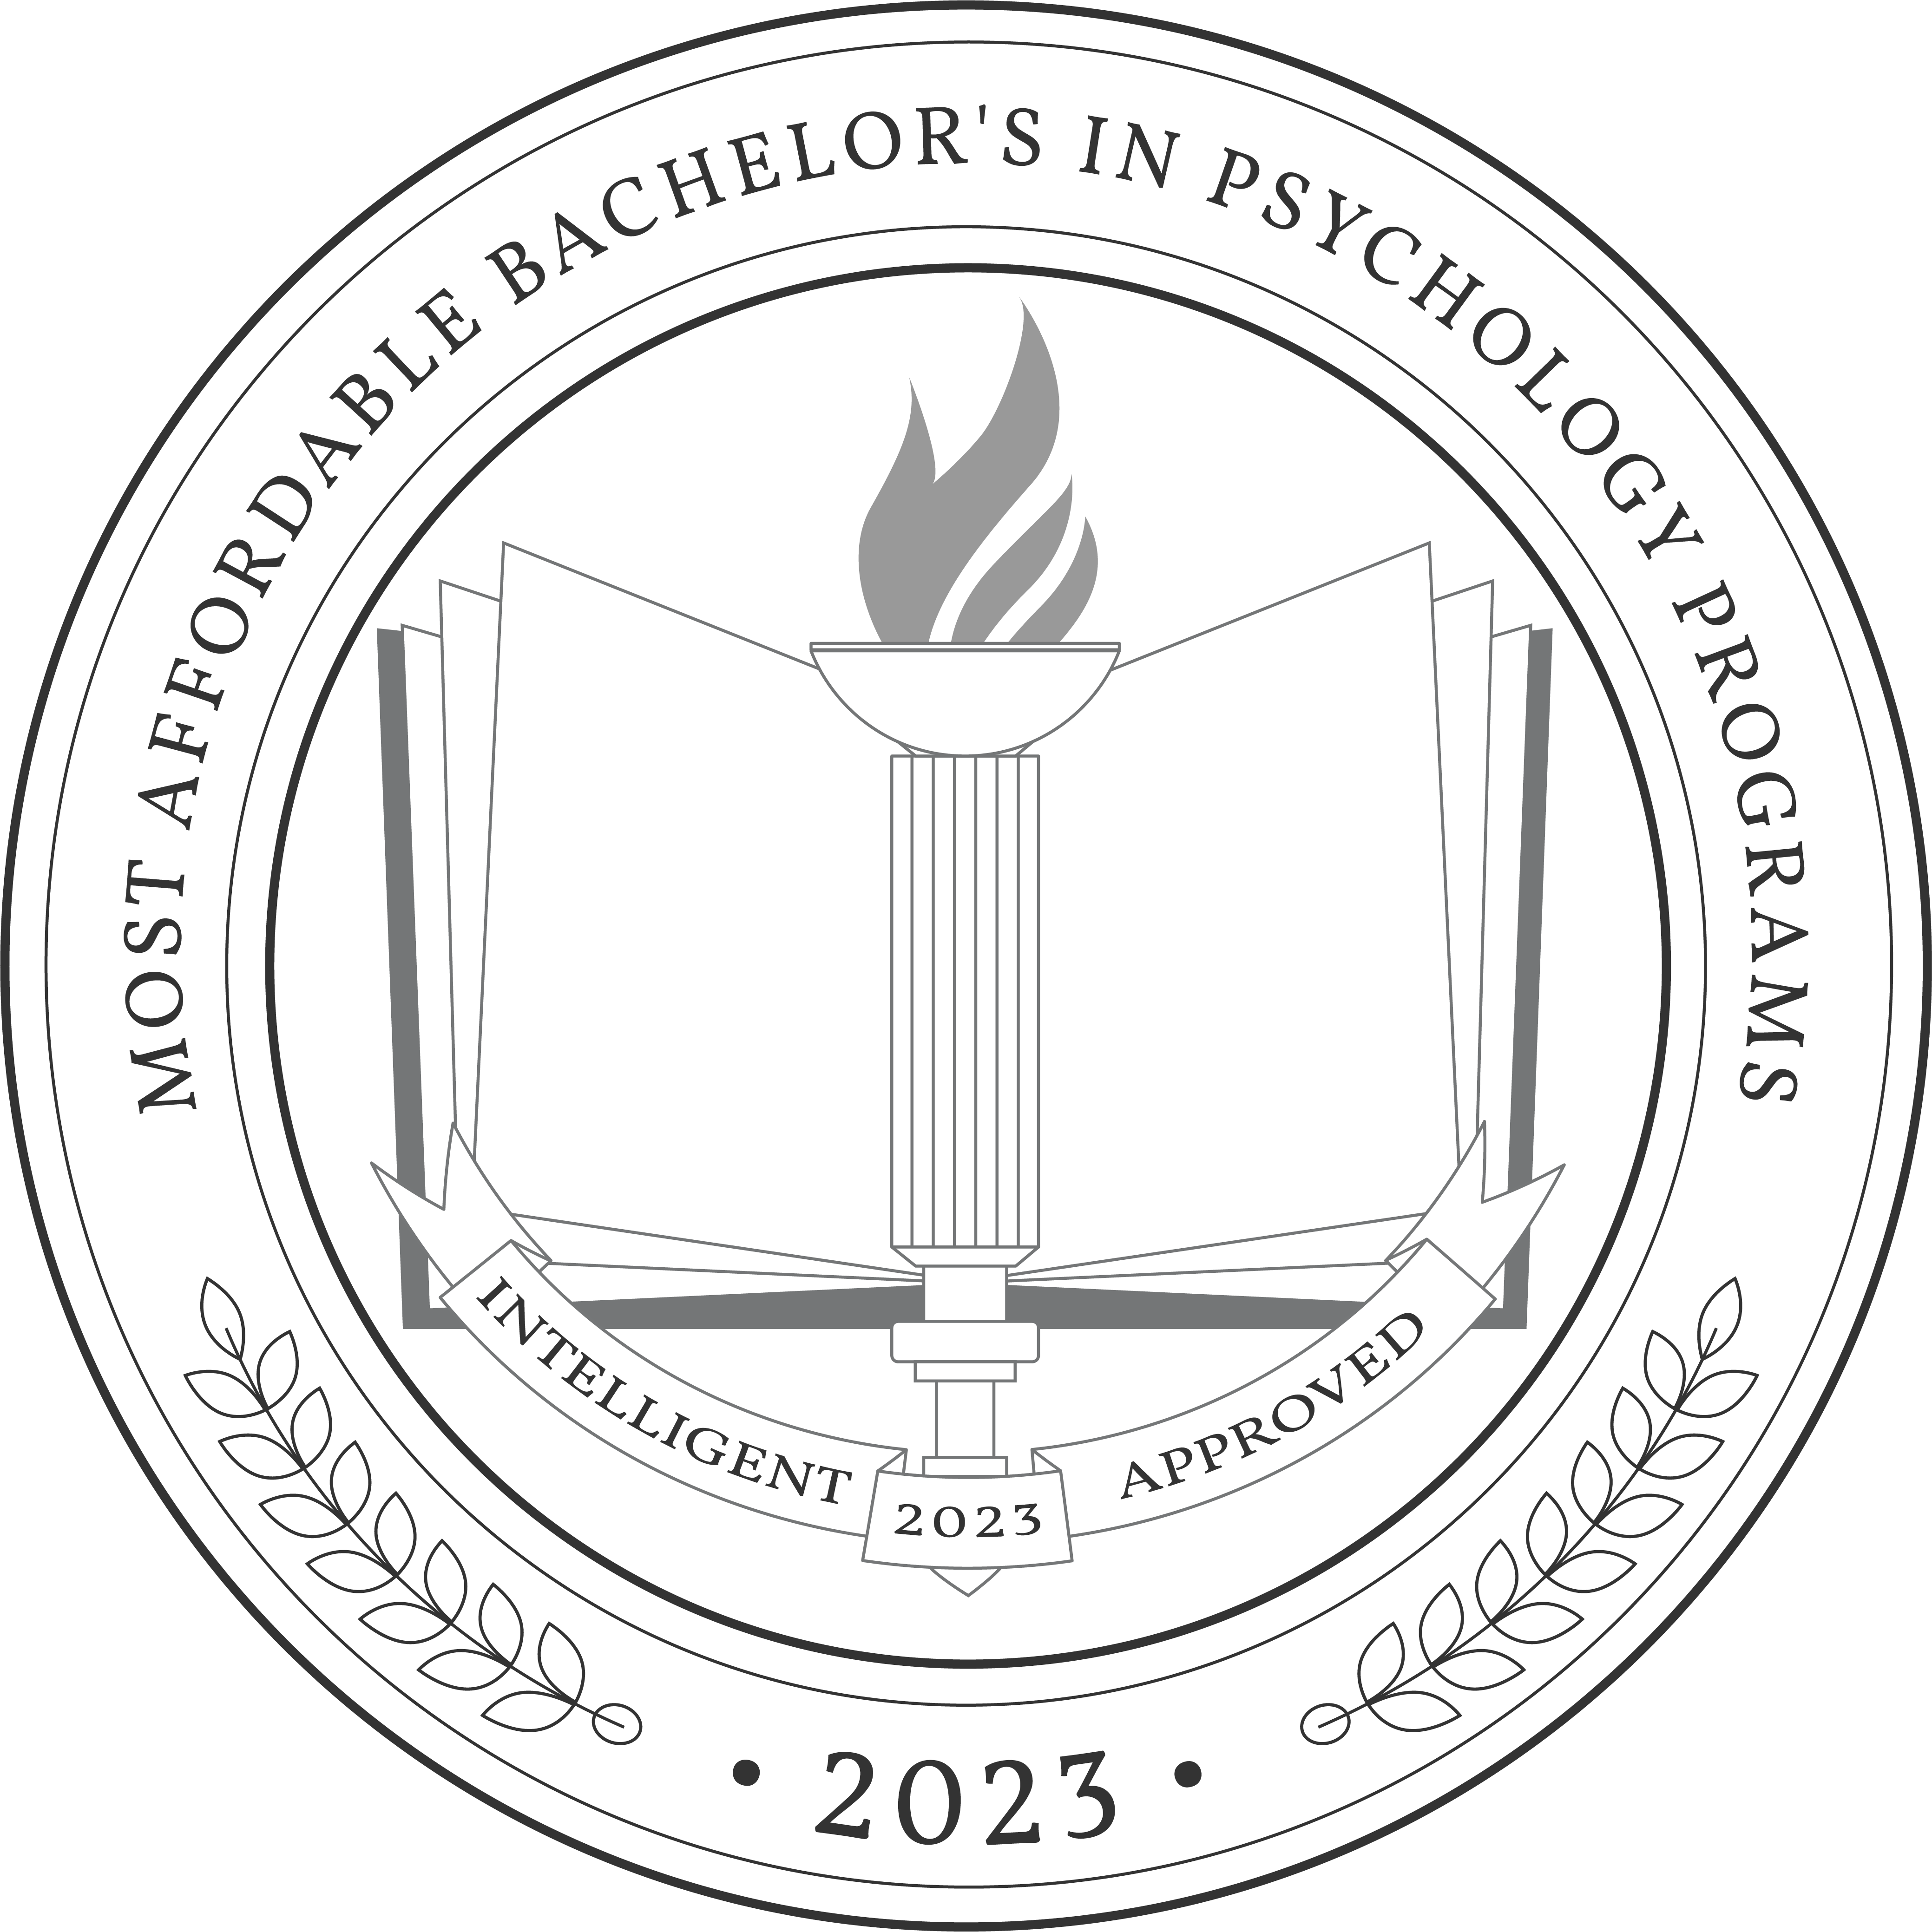 Most Affordable Bachelor's in Psychology Programs 2023